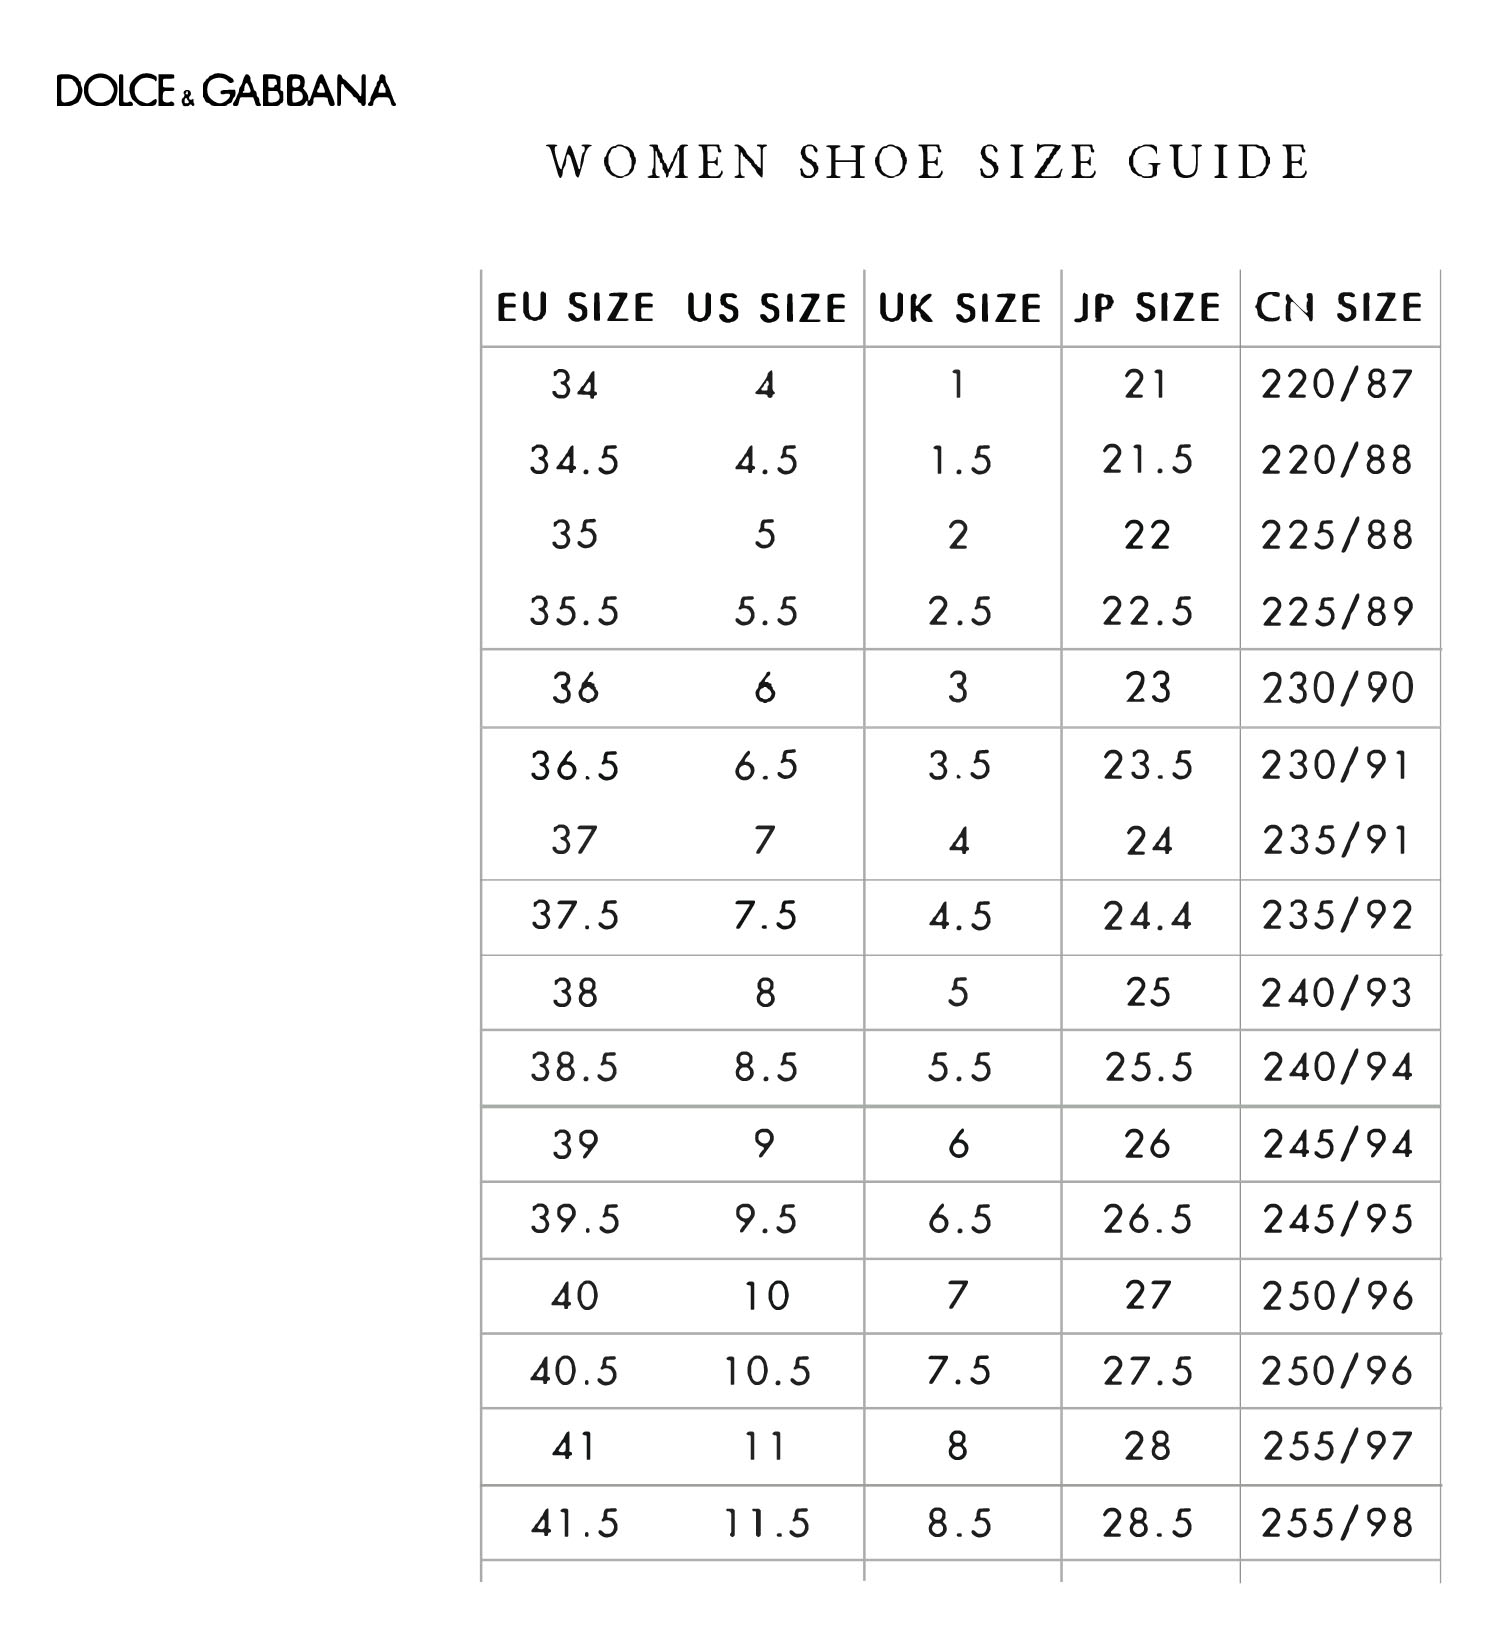 Размеры дольче габбана. Dolce Gabbana Размерная сетка. Размерная сетка обуви Дольче Габбана женские. Размерная сетка обуви Dolce Gabbana. Таблица размеров обуви Дольче Габбана.